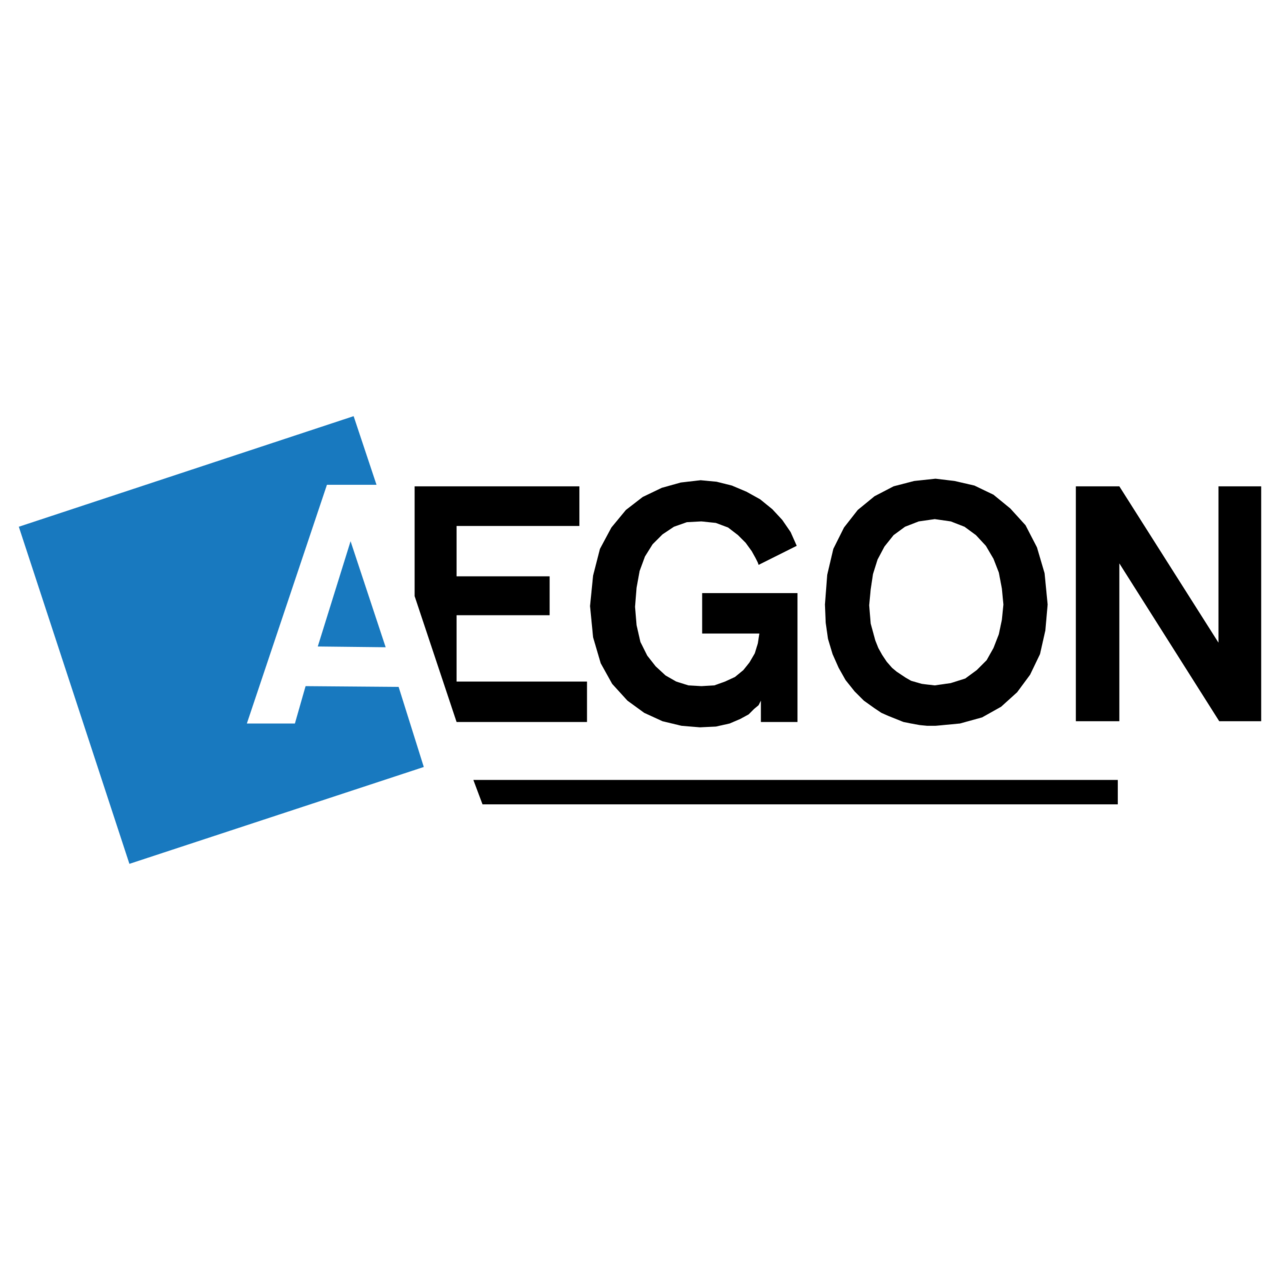 aegon-logo